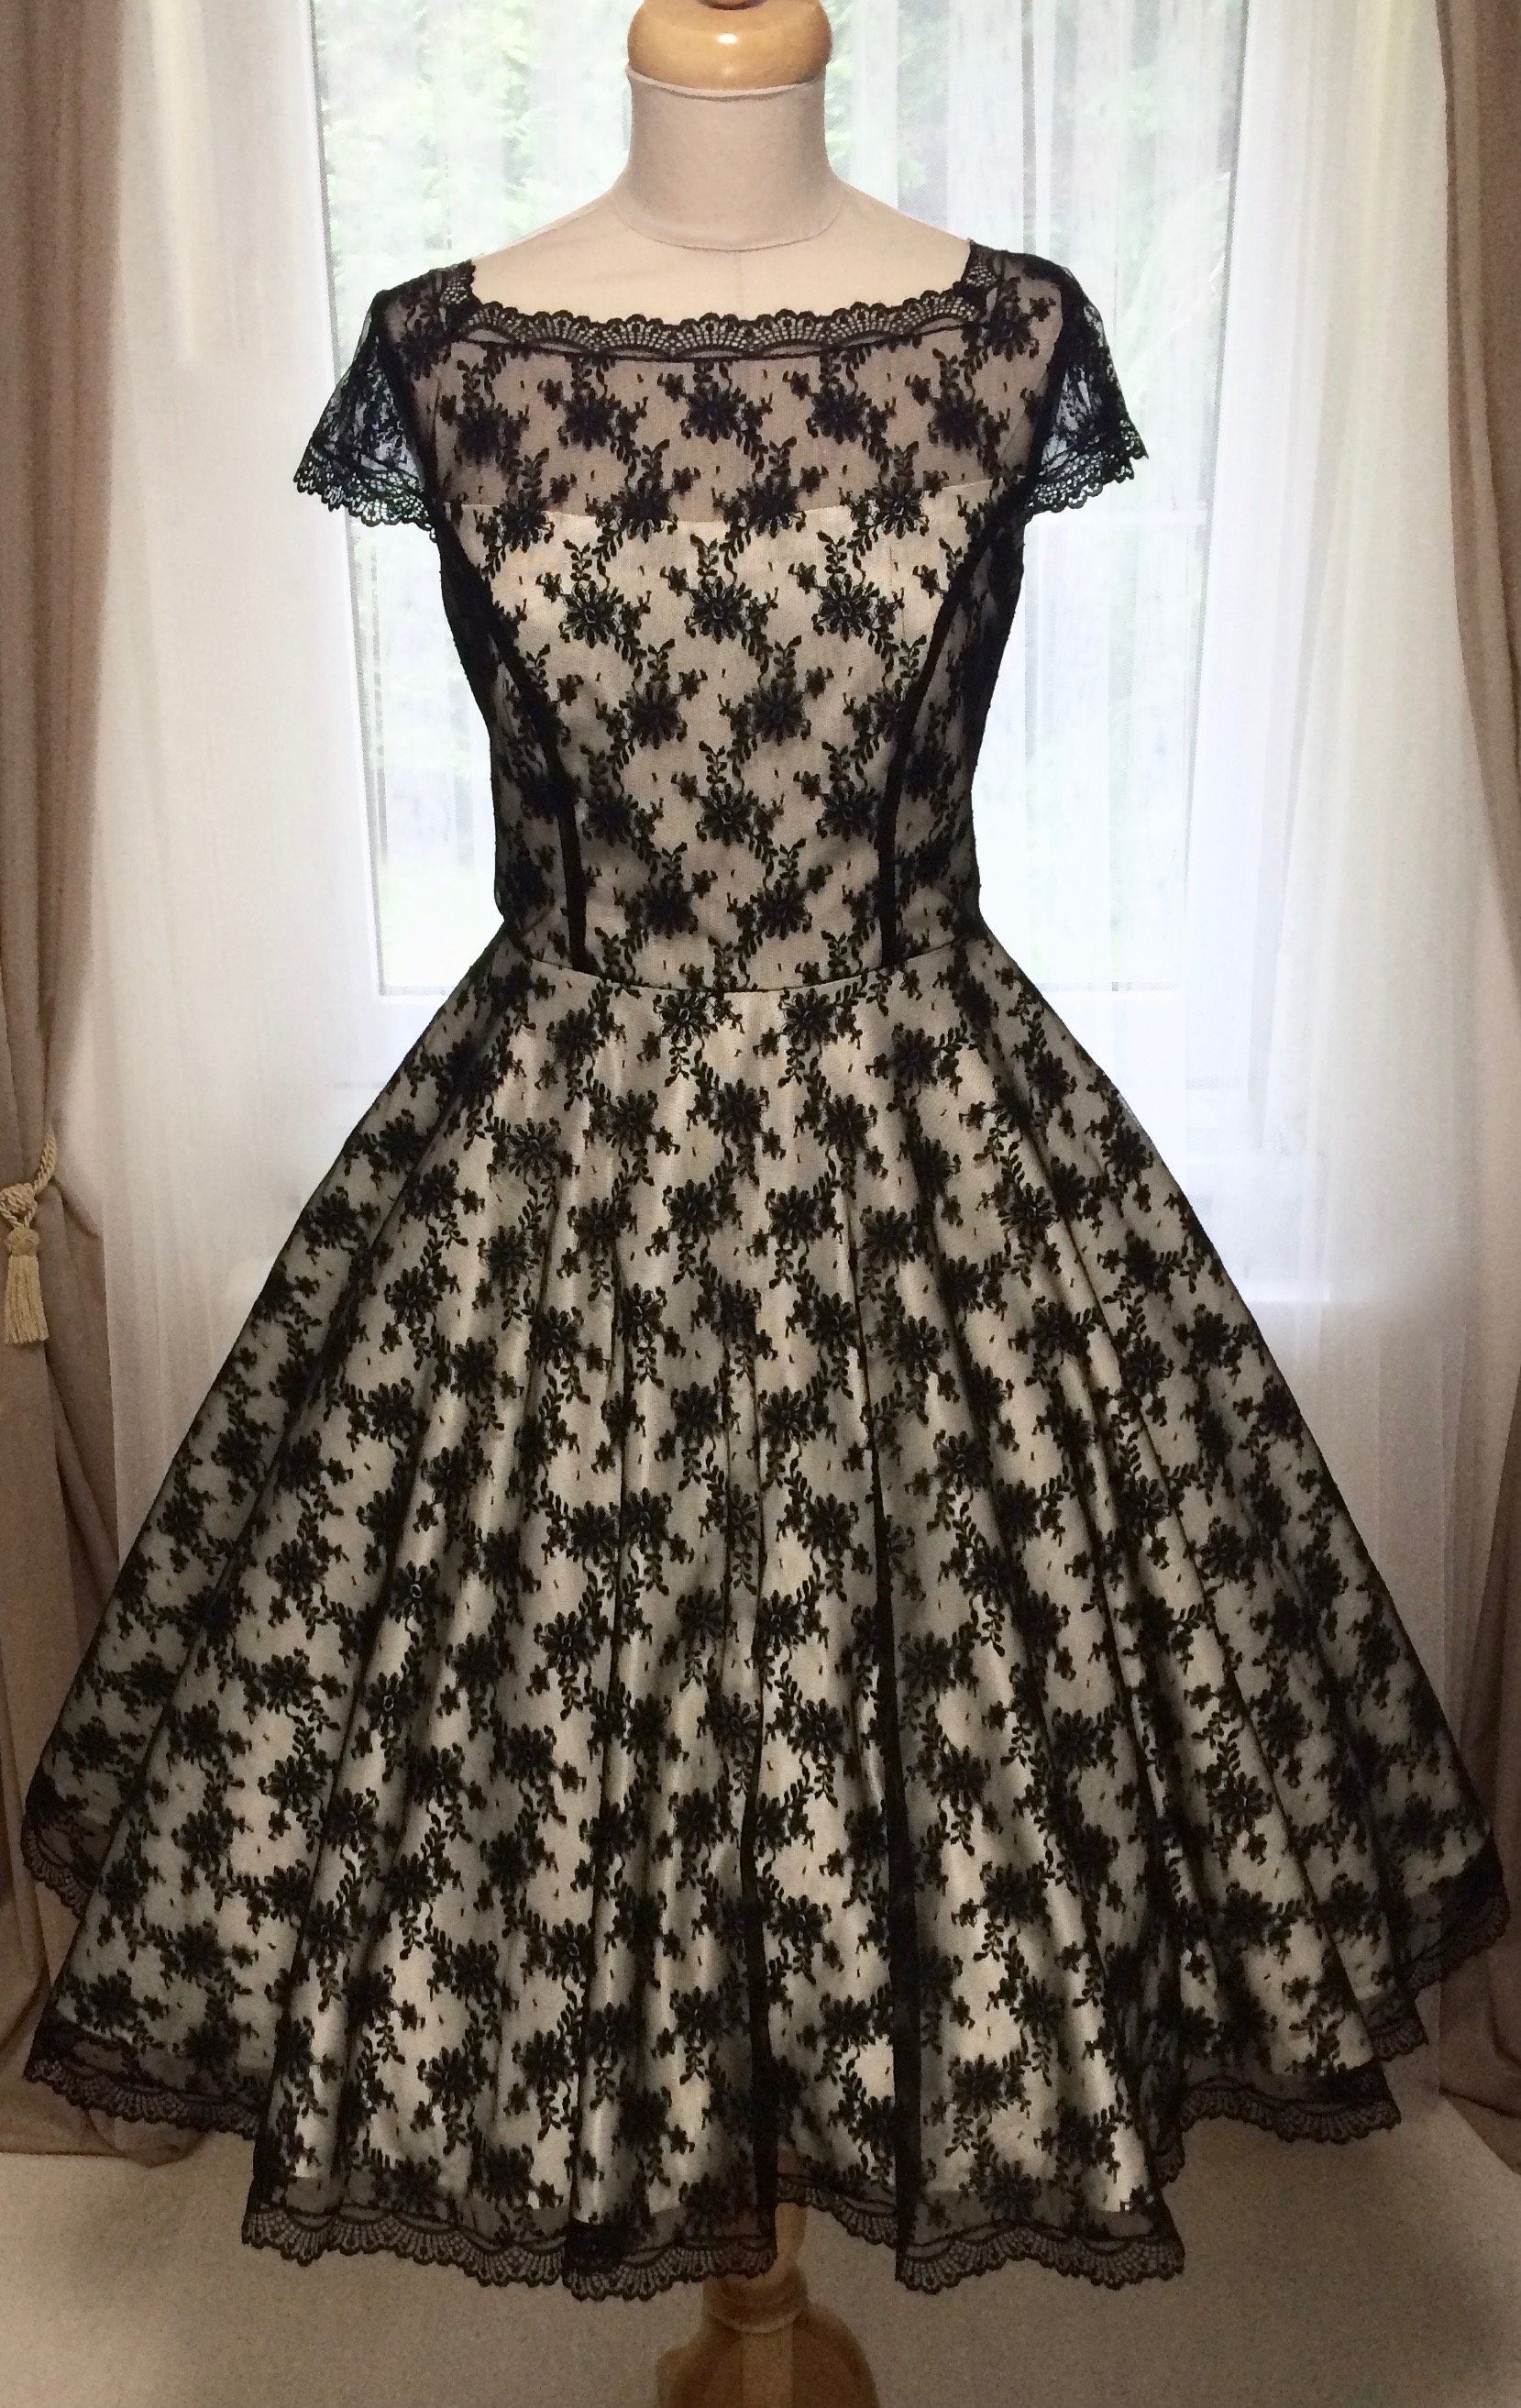 Korzetové retro šaty s černou krajkou, vel. 38